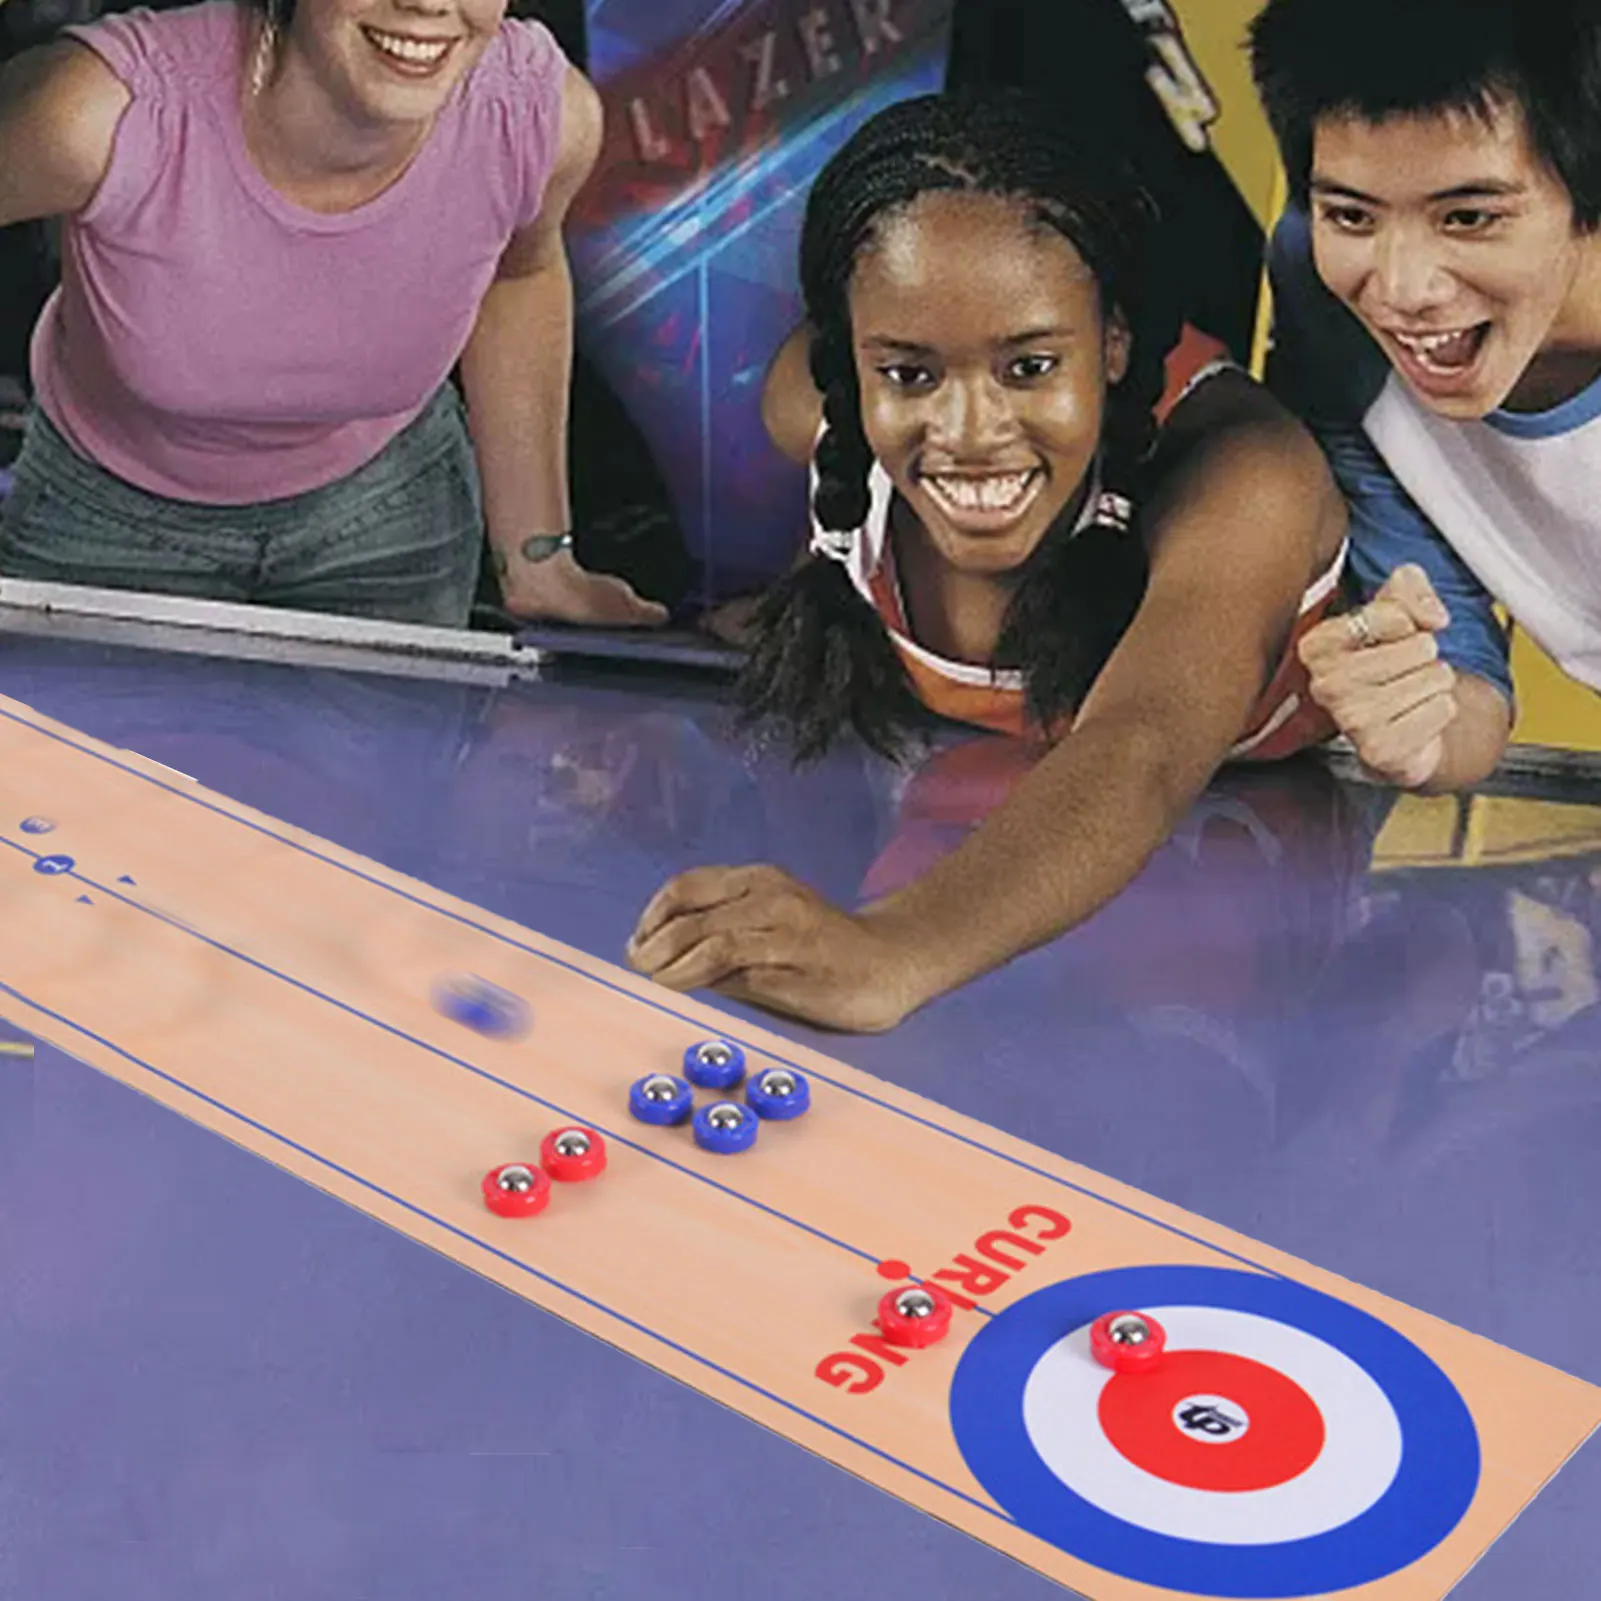  Shuffleboard Curling Bowling 3 in 1 Board Games Blue Orange 8  Rollers - Shuffleboard Pucks and Bowling Ball and Curling Games, Mini  Tabletop Game, Family Board Games Tabletop Family Fun